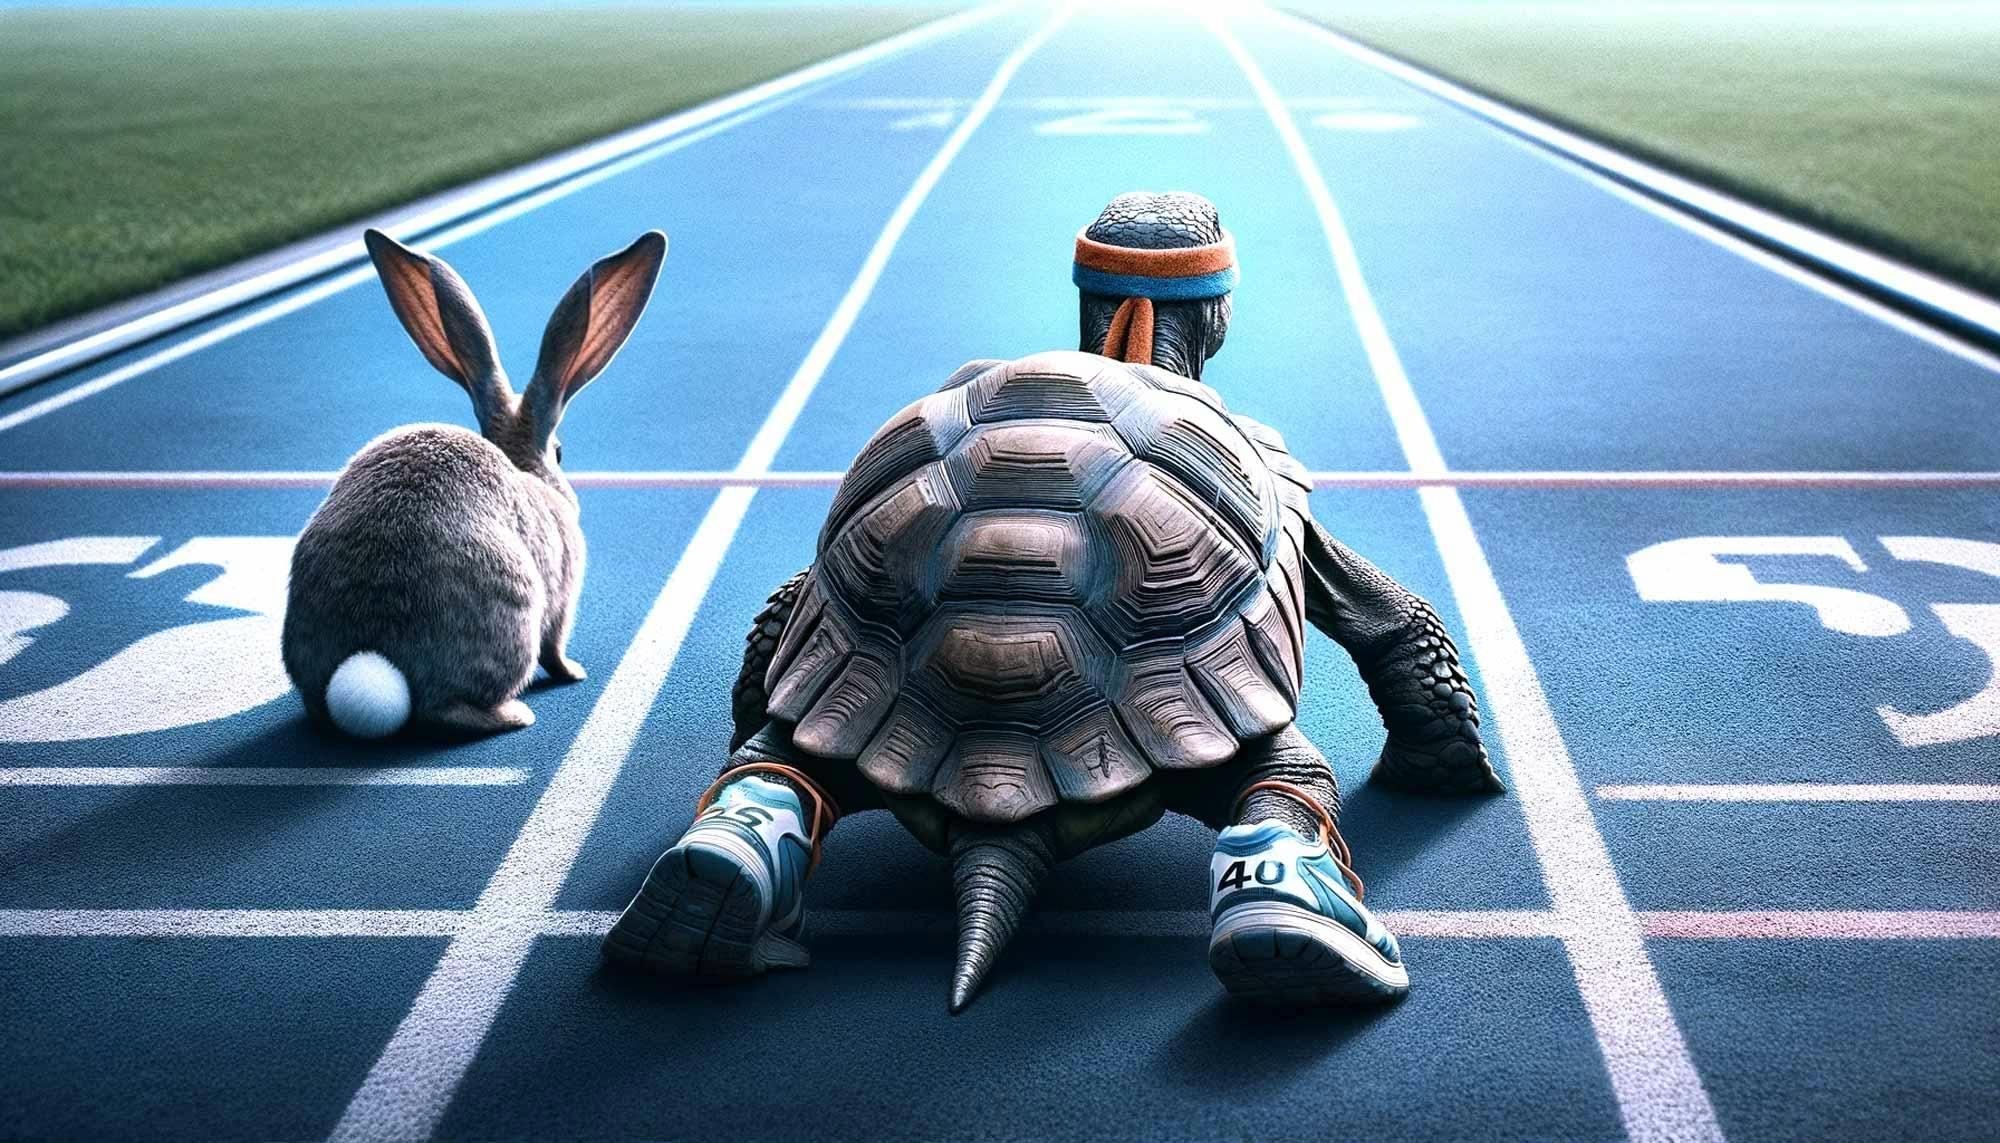 Tortoise & hare racing